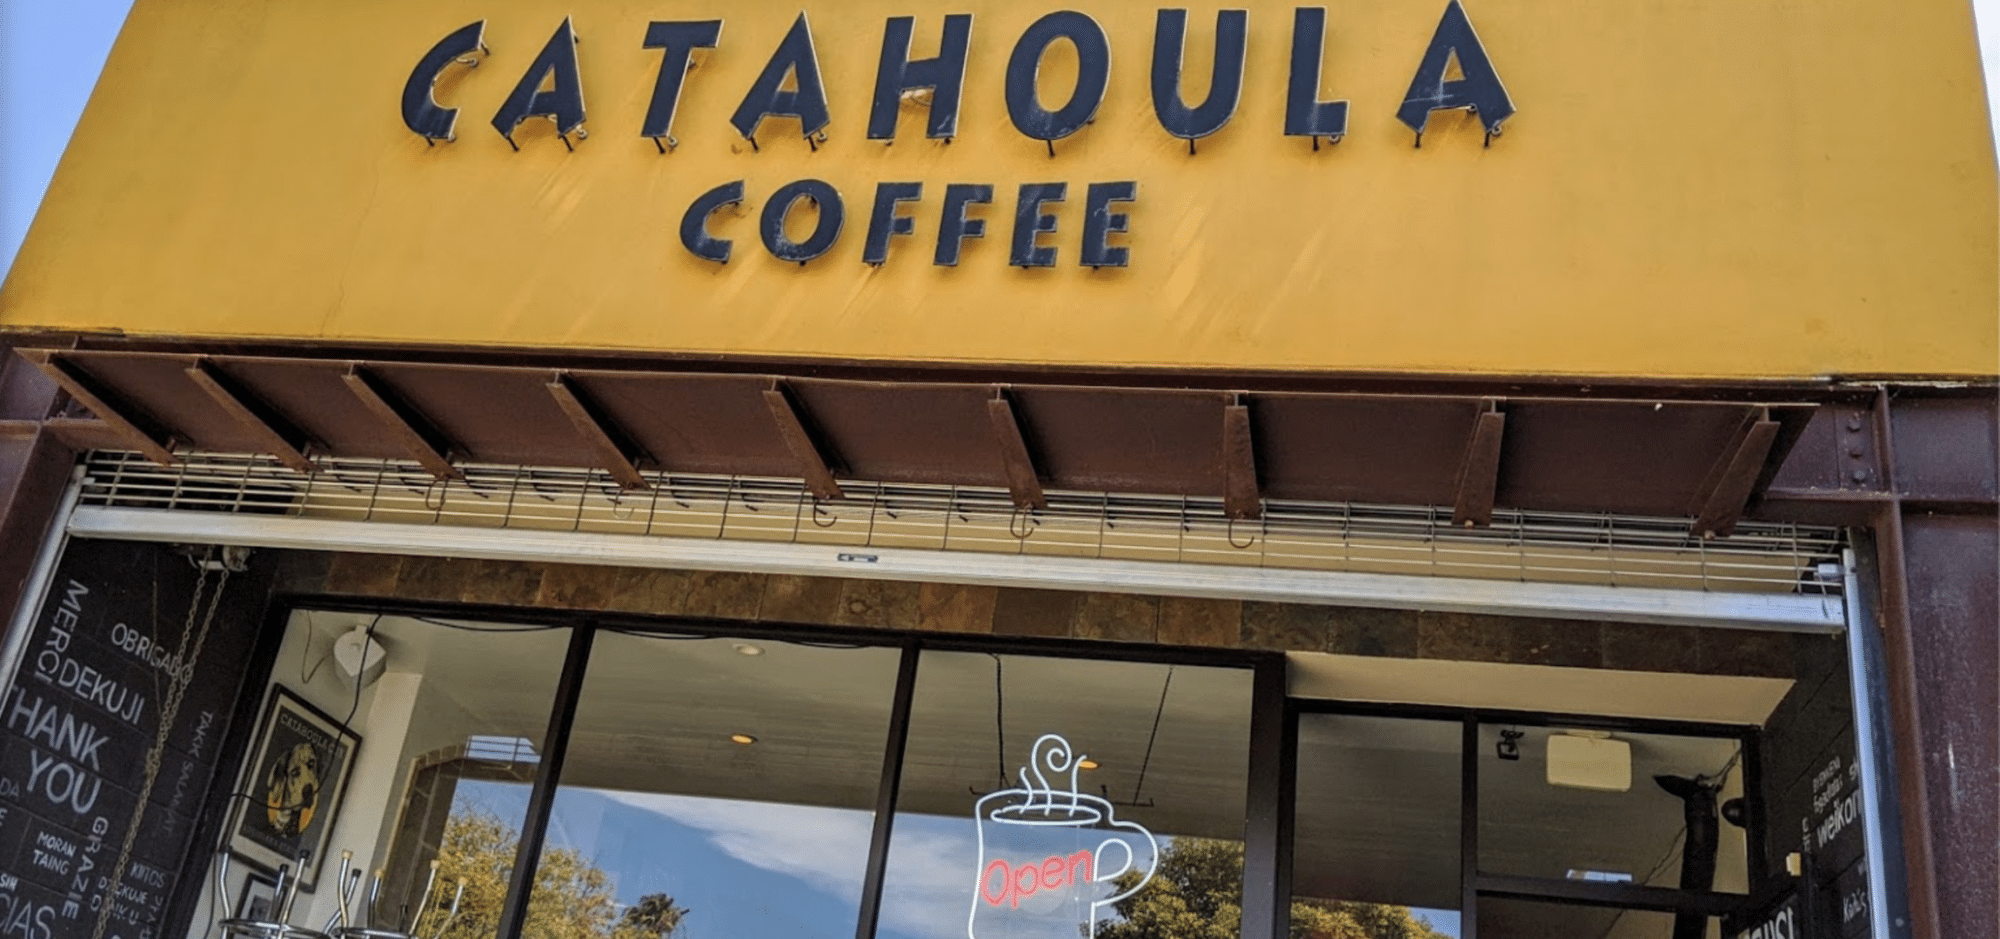 Catahoula Coffee Co.